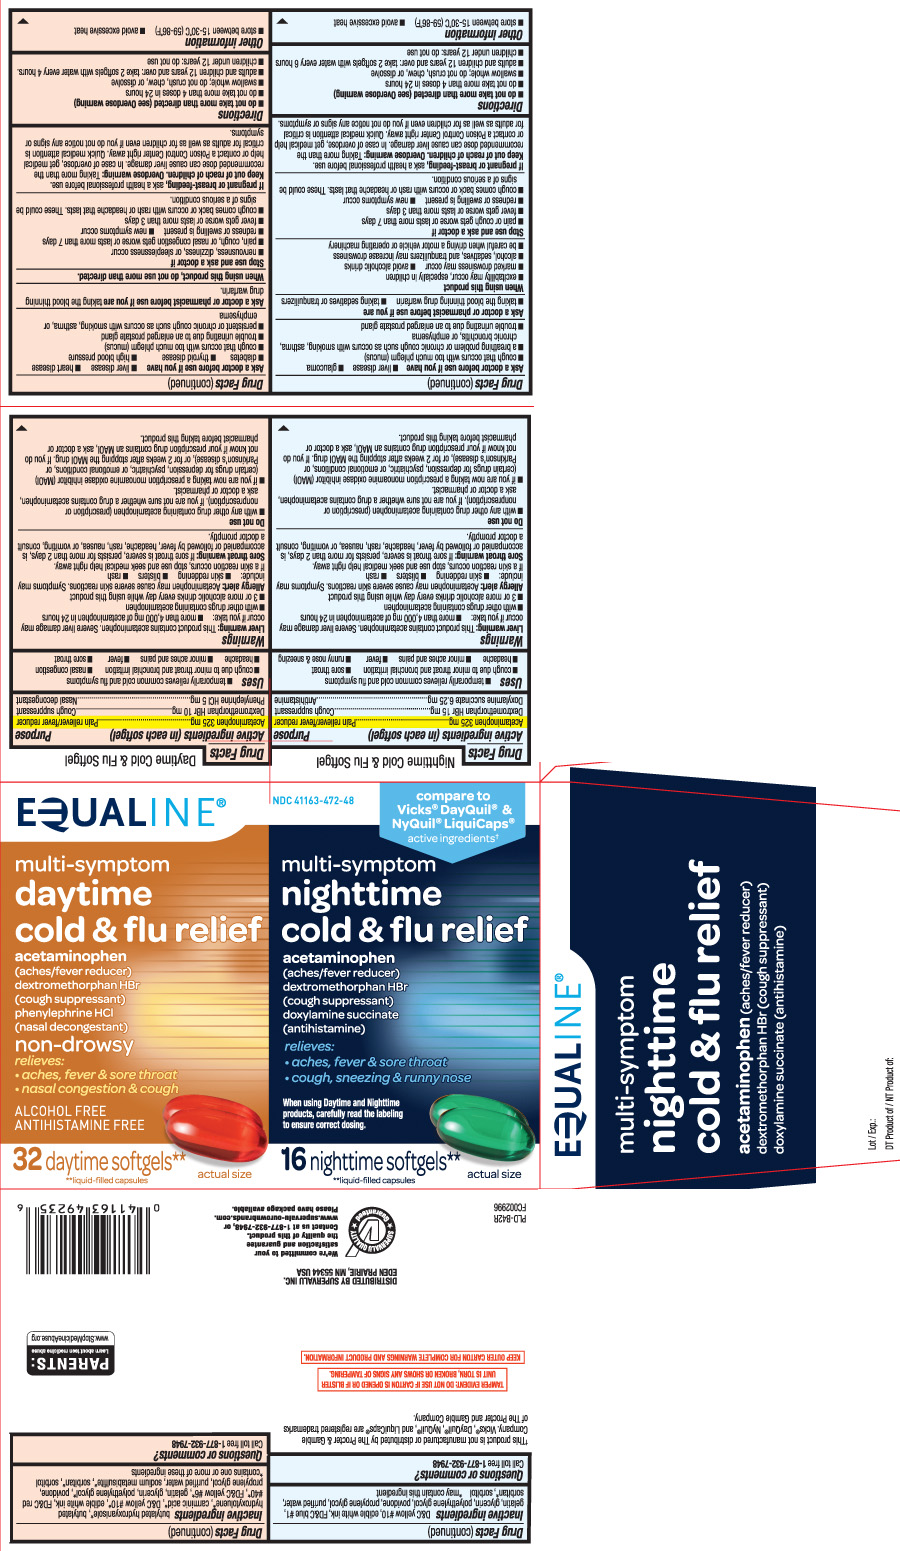 Daytime - Acetaminophen 325 mg, Dextromethorphan Hbr 10 mg, Phenylephrine HCI 5 mg NightTime - Acetaminophen 325 mg, Dextromethorphan HBr 15 mg, Doxylamine Succinate 6.25 mg